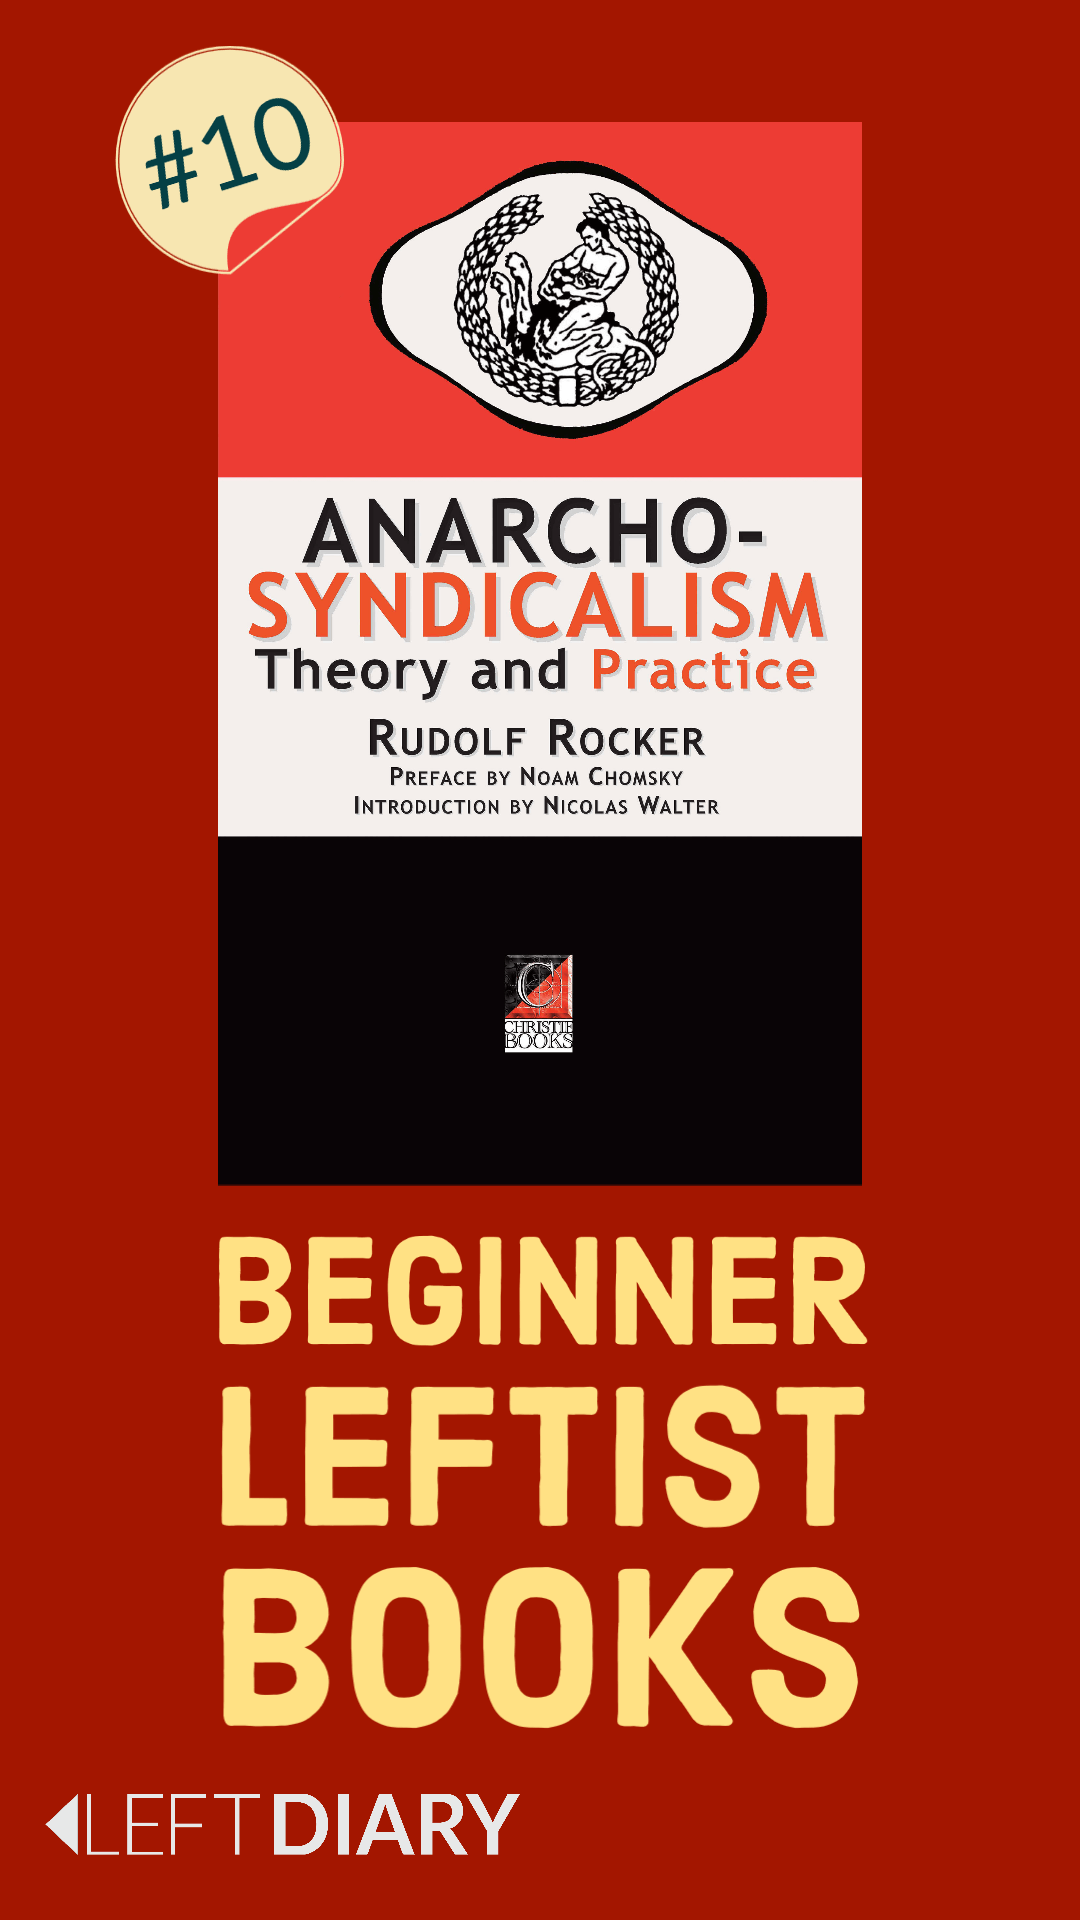 Beginner leftist books anarchist books Anarcho-syndicalism Rudolf Rocker